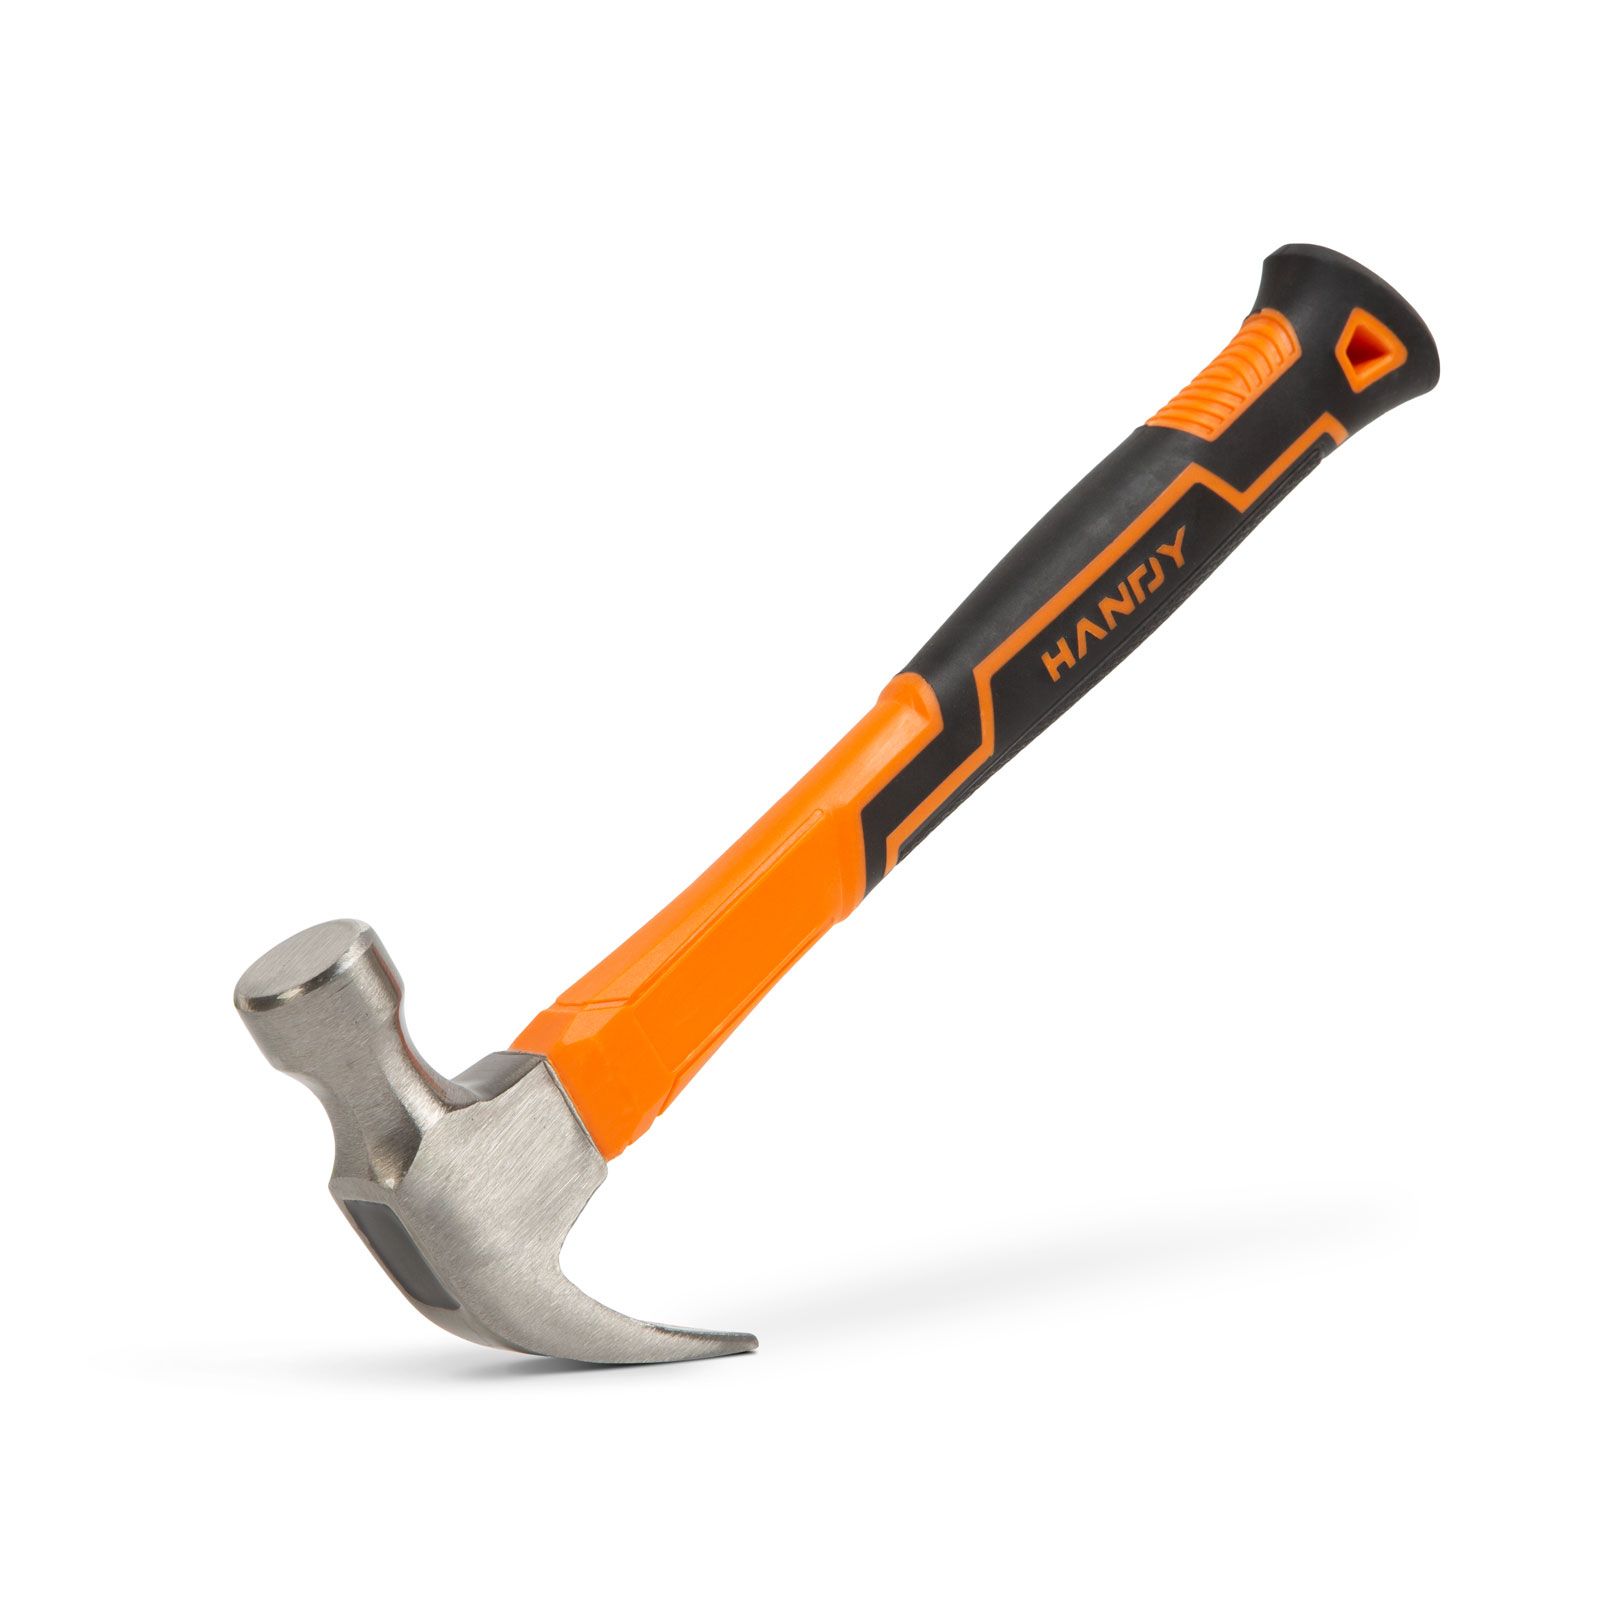 Professional claw hammer - 226 g thumb